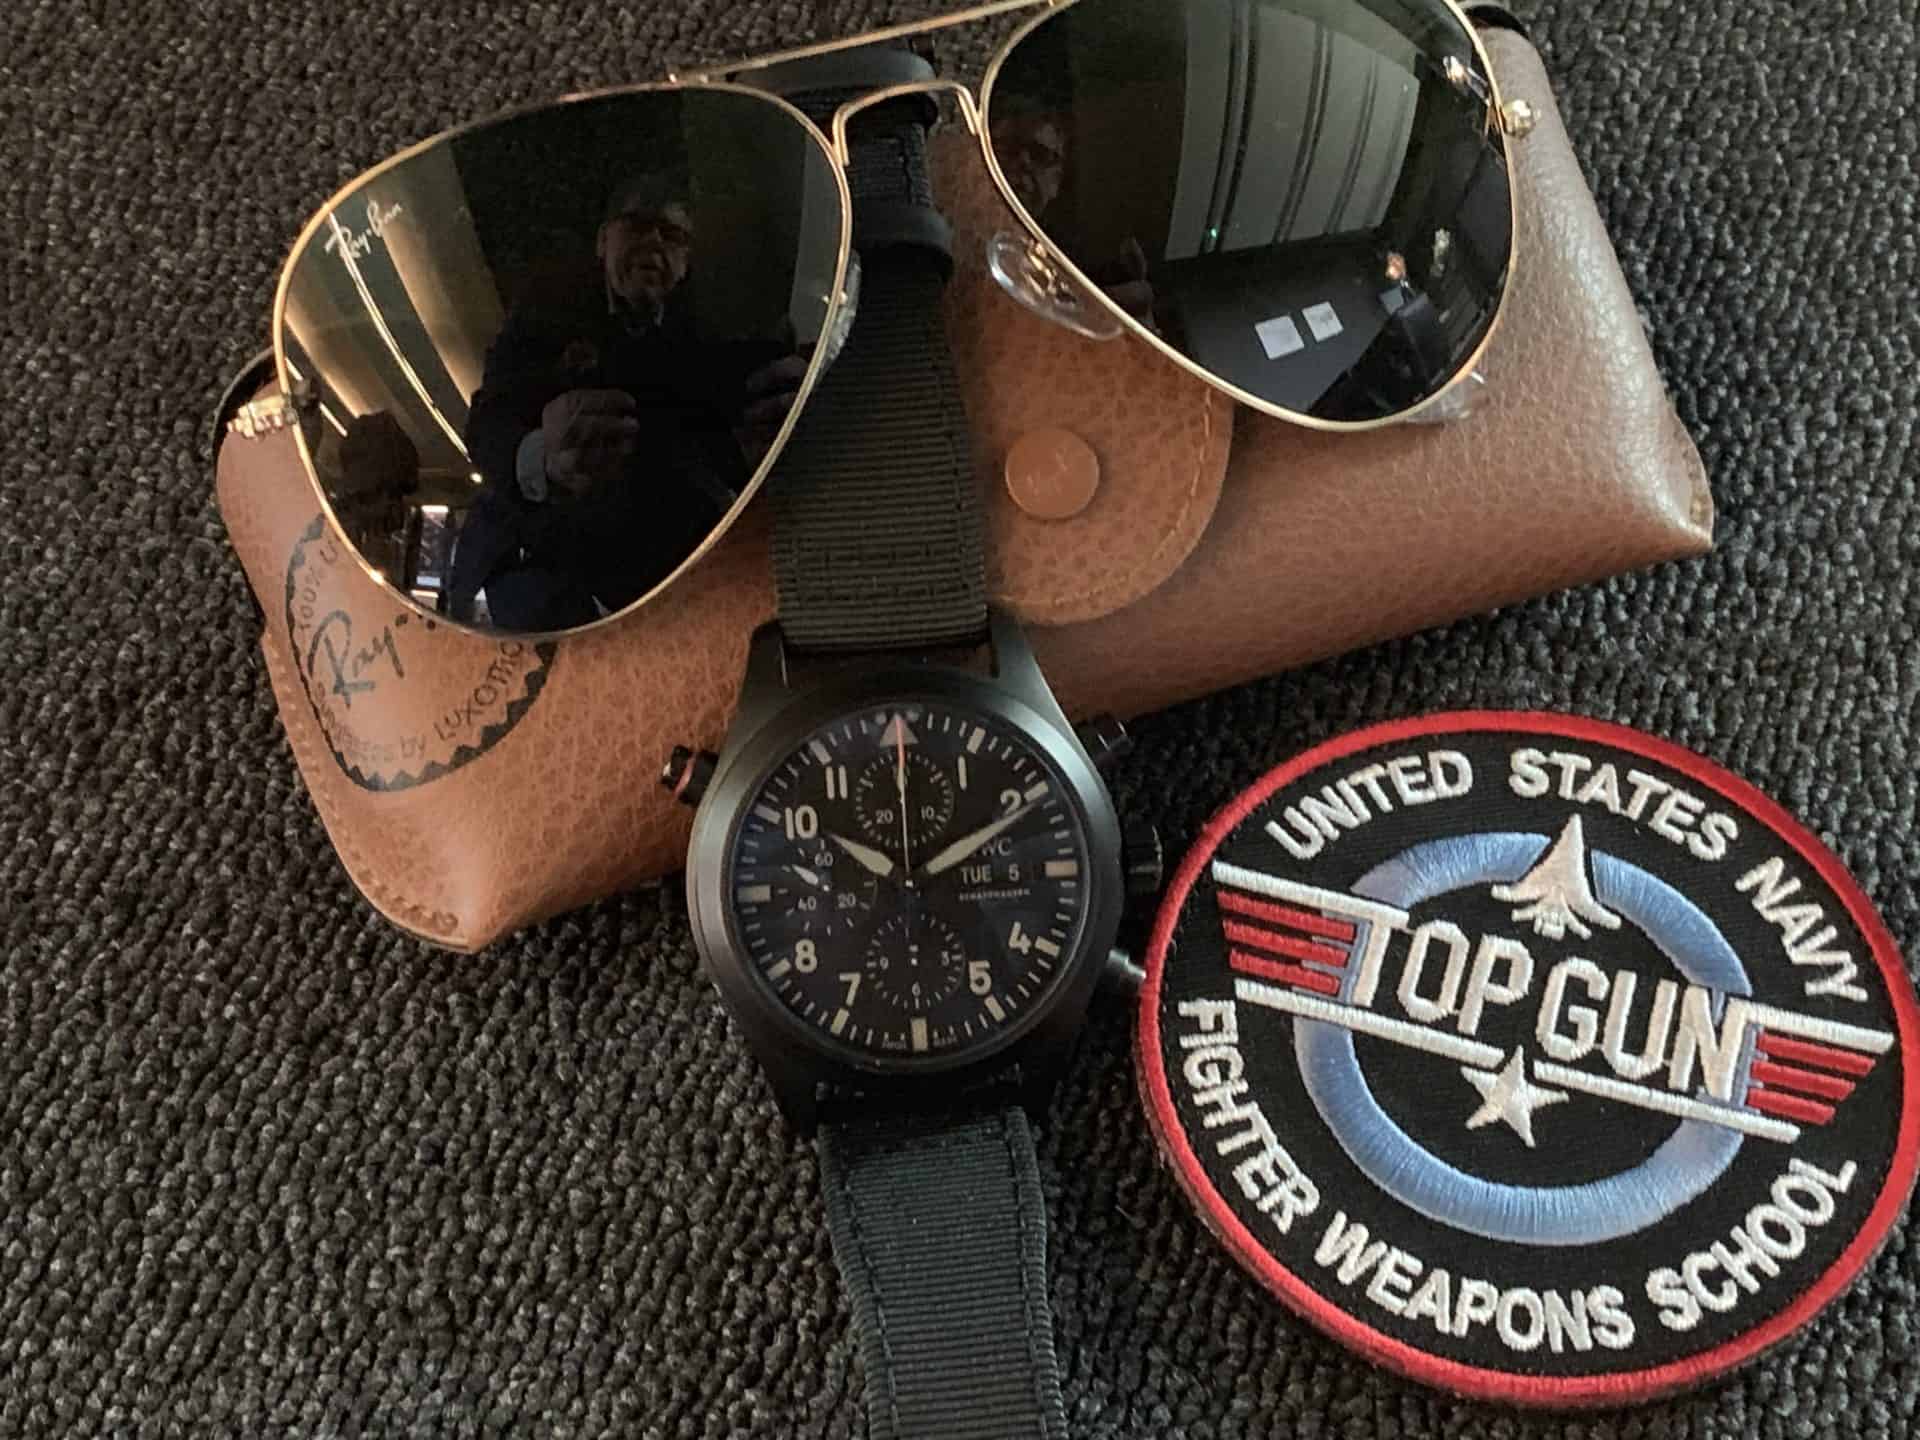 IWC Pilot's Watch Double Chronograph Top Gun Ceratanium